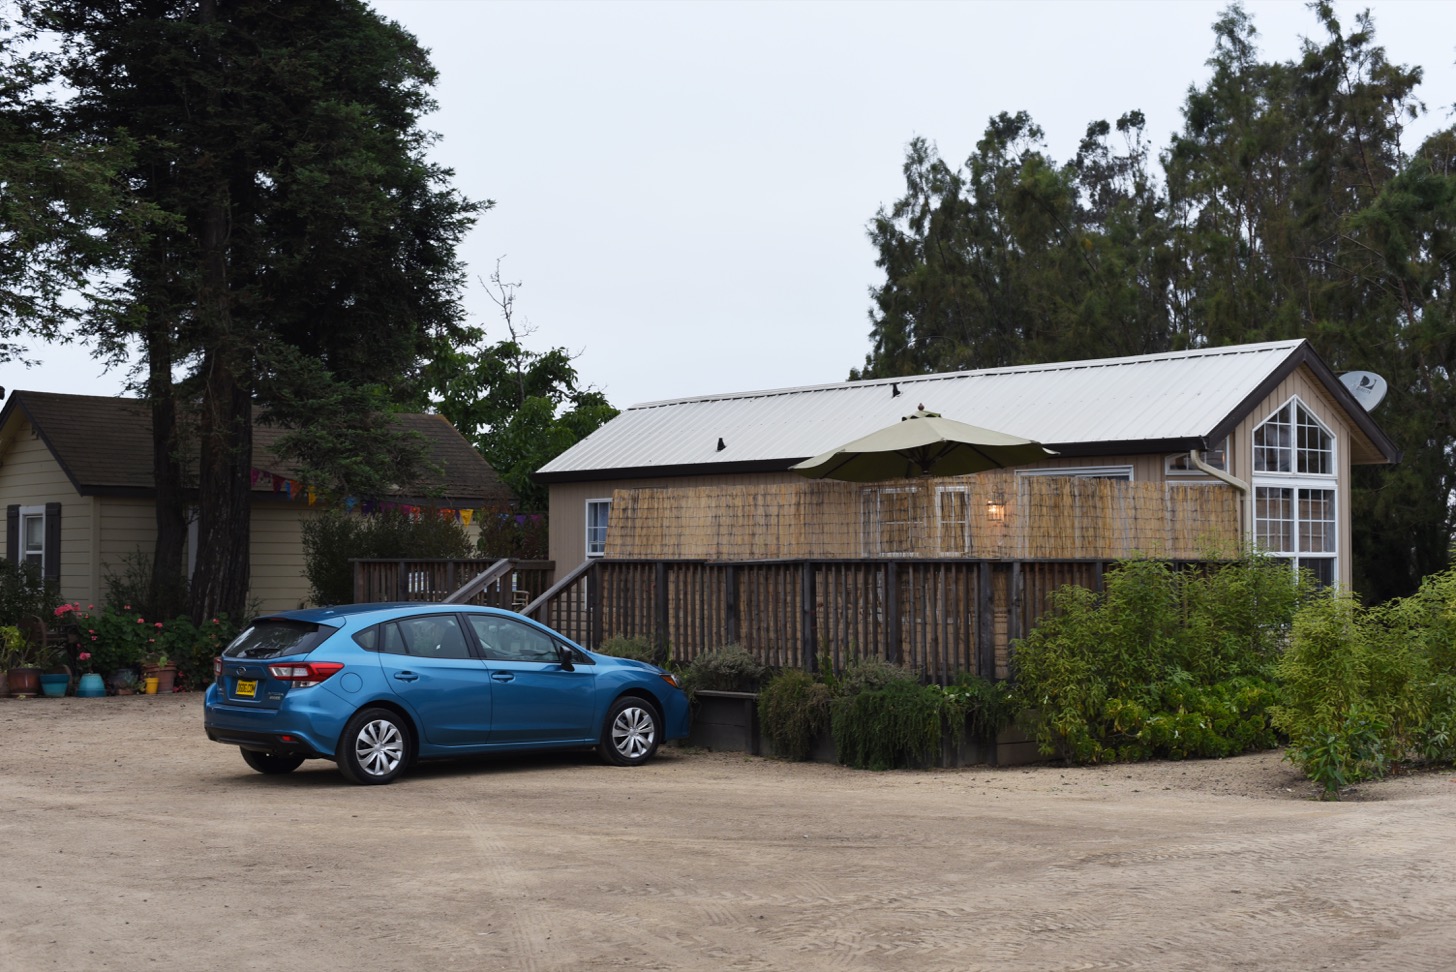 My Subaru Impreza parked outside a cabin.